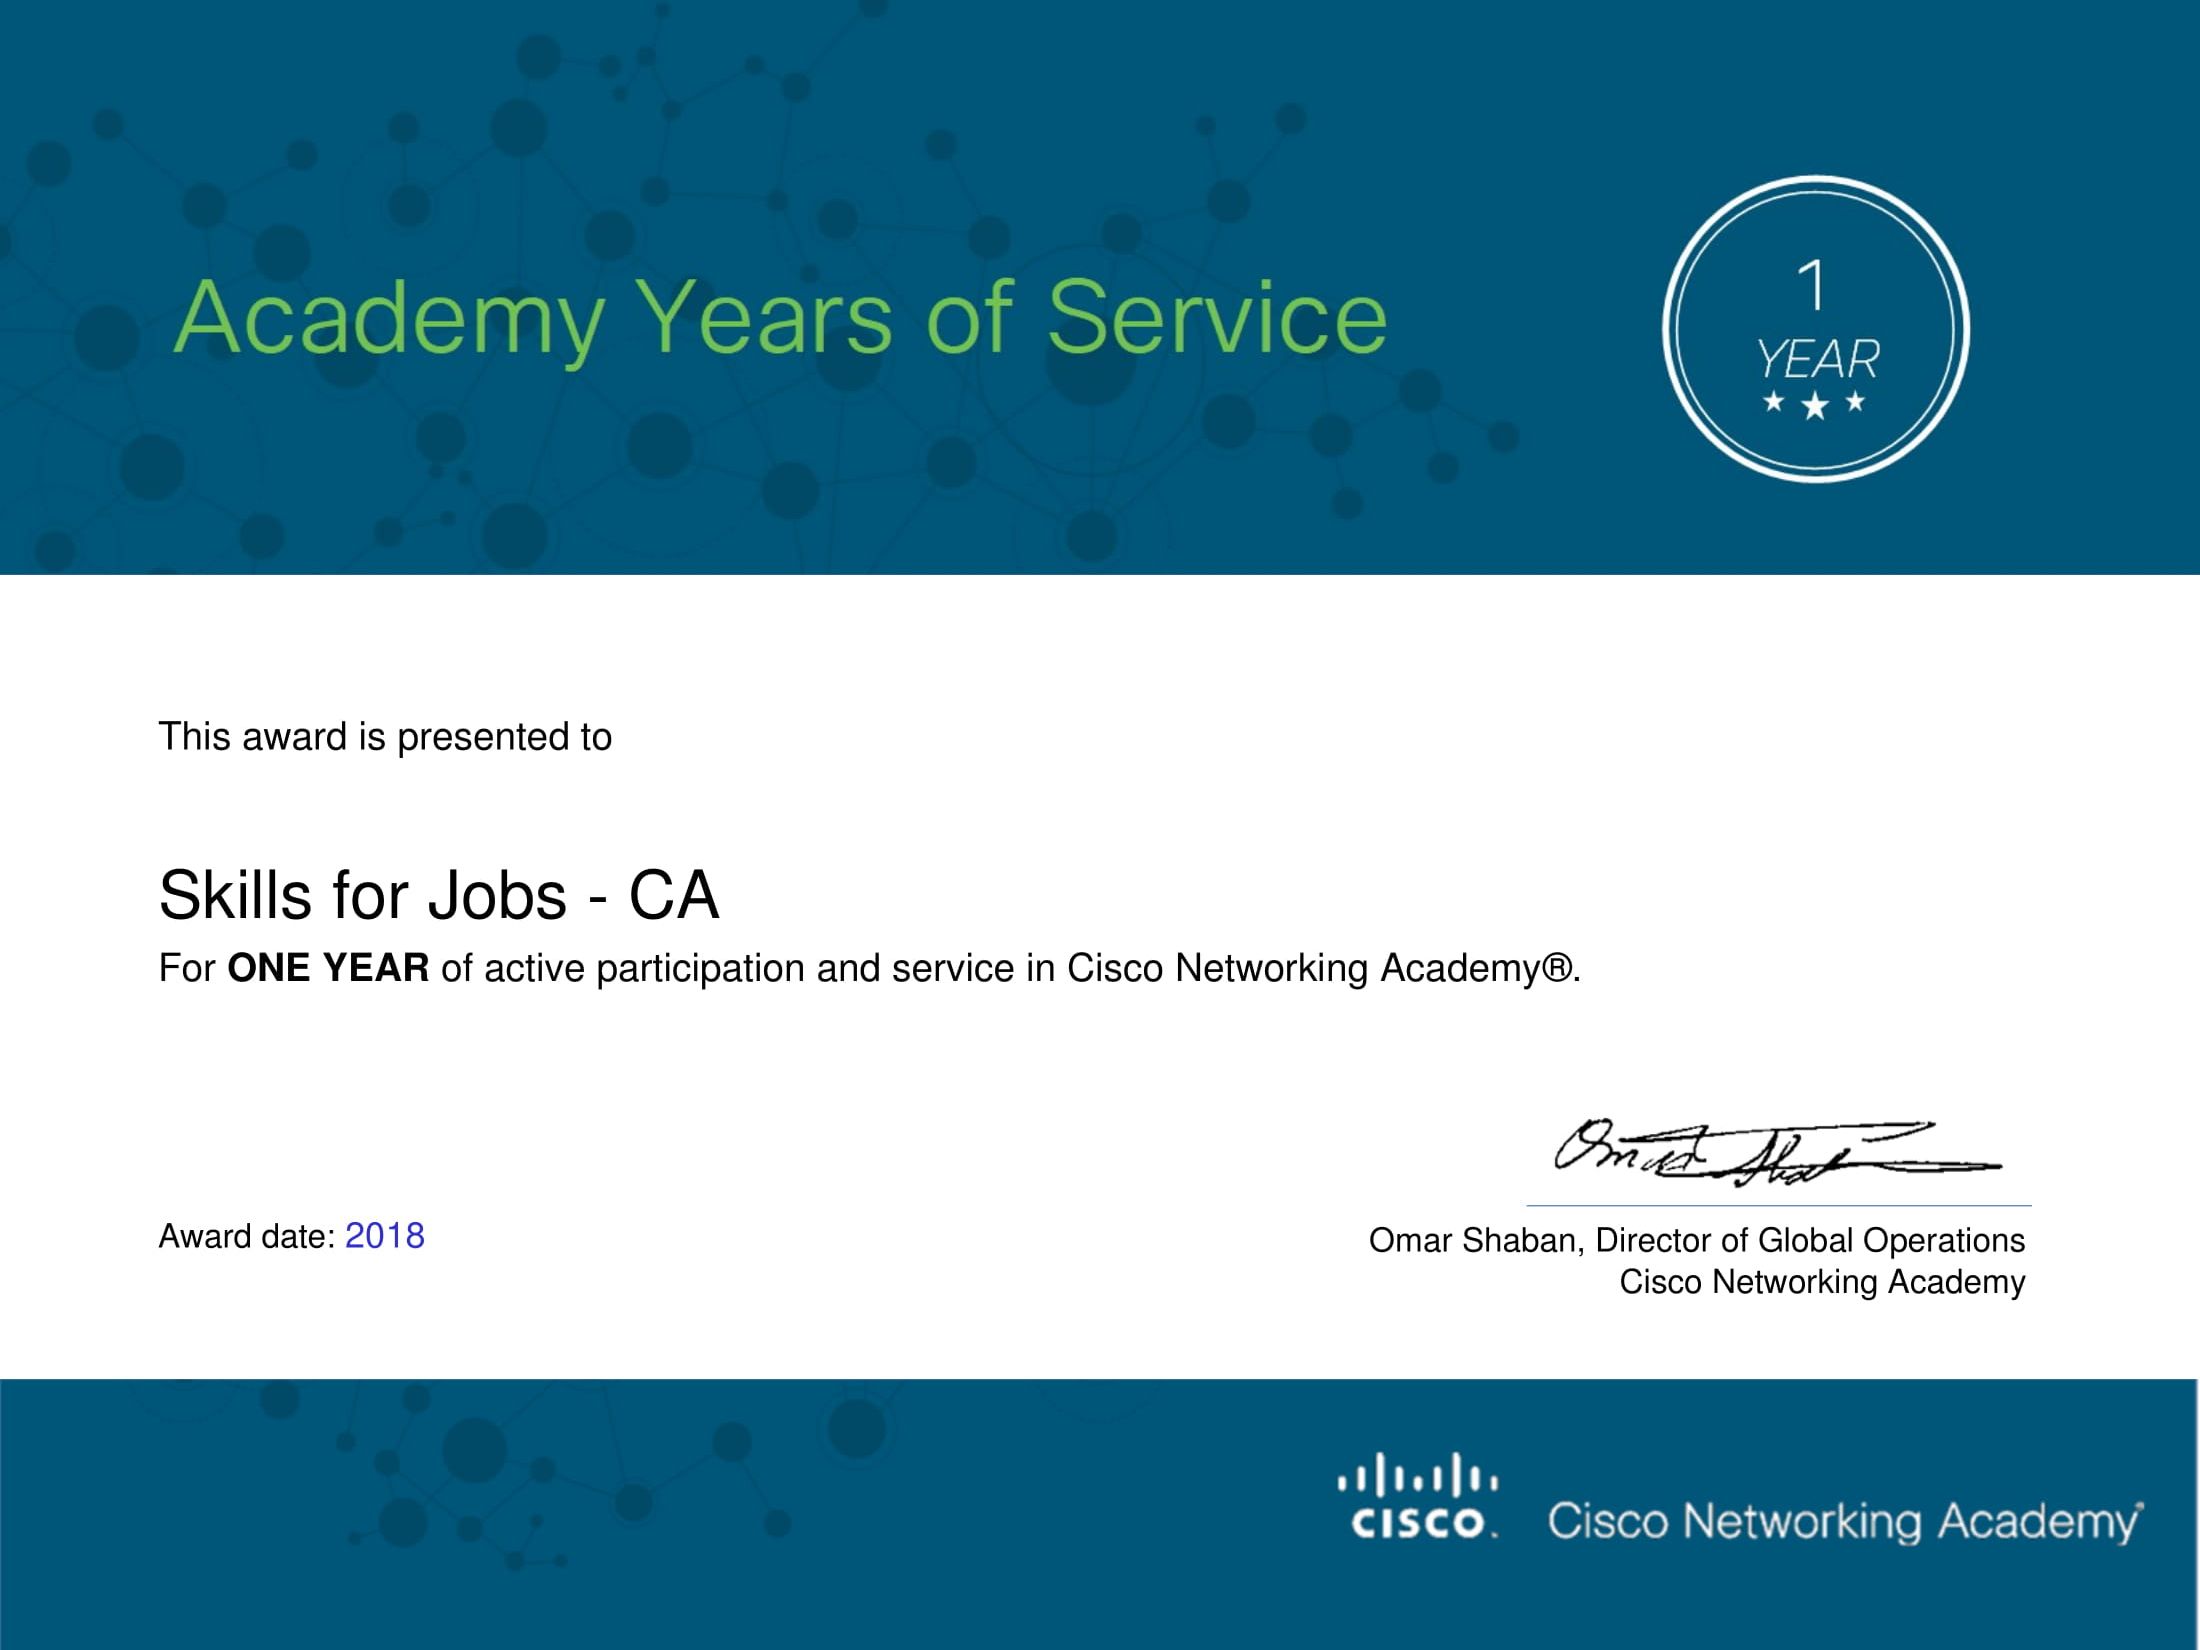 Celebrating 1 year ‘skills for jobs’ s4j CISCO Academy